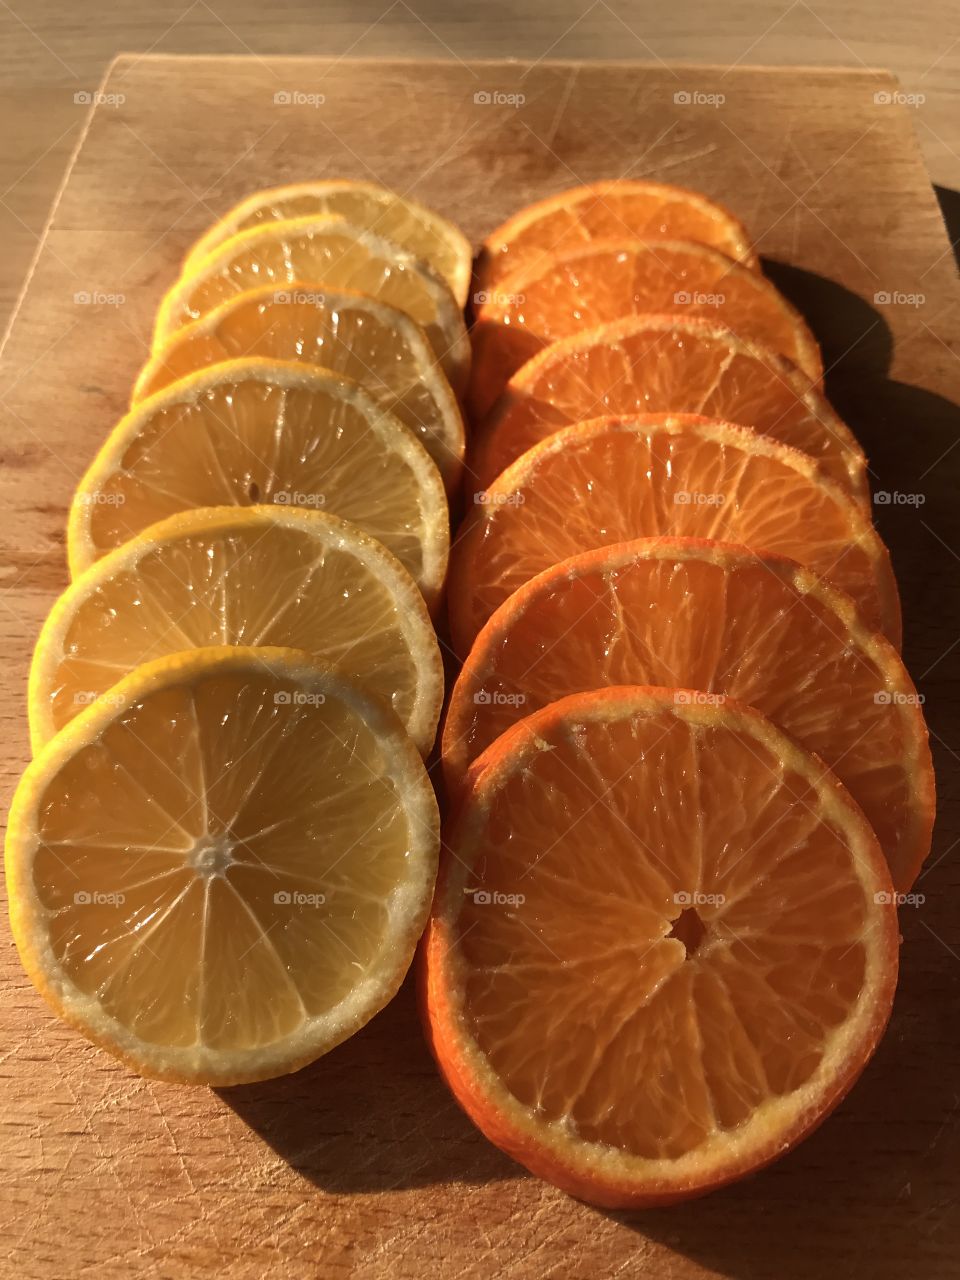 Orange and lemon